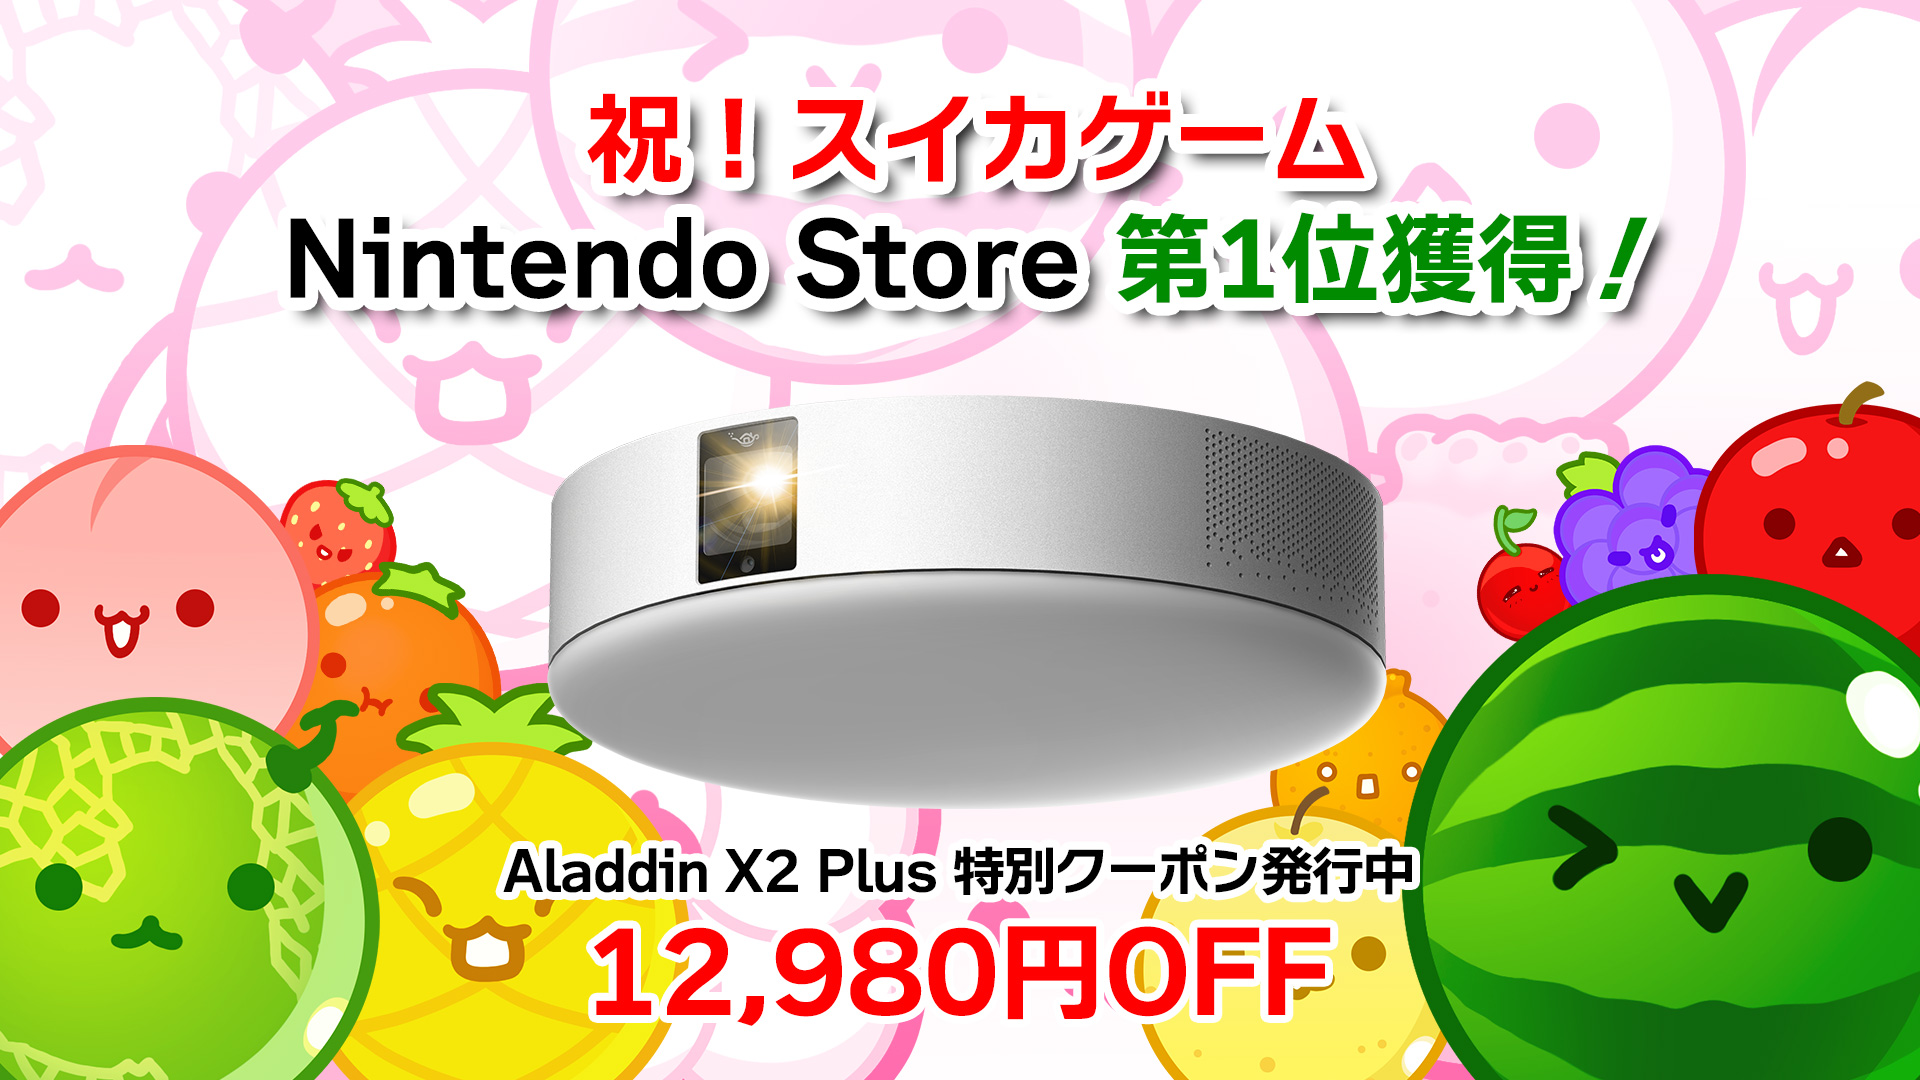 Aladdin X2 Plus「20,000円オフ」クーポン